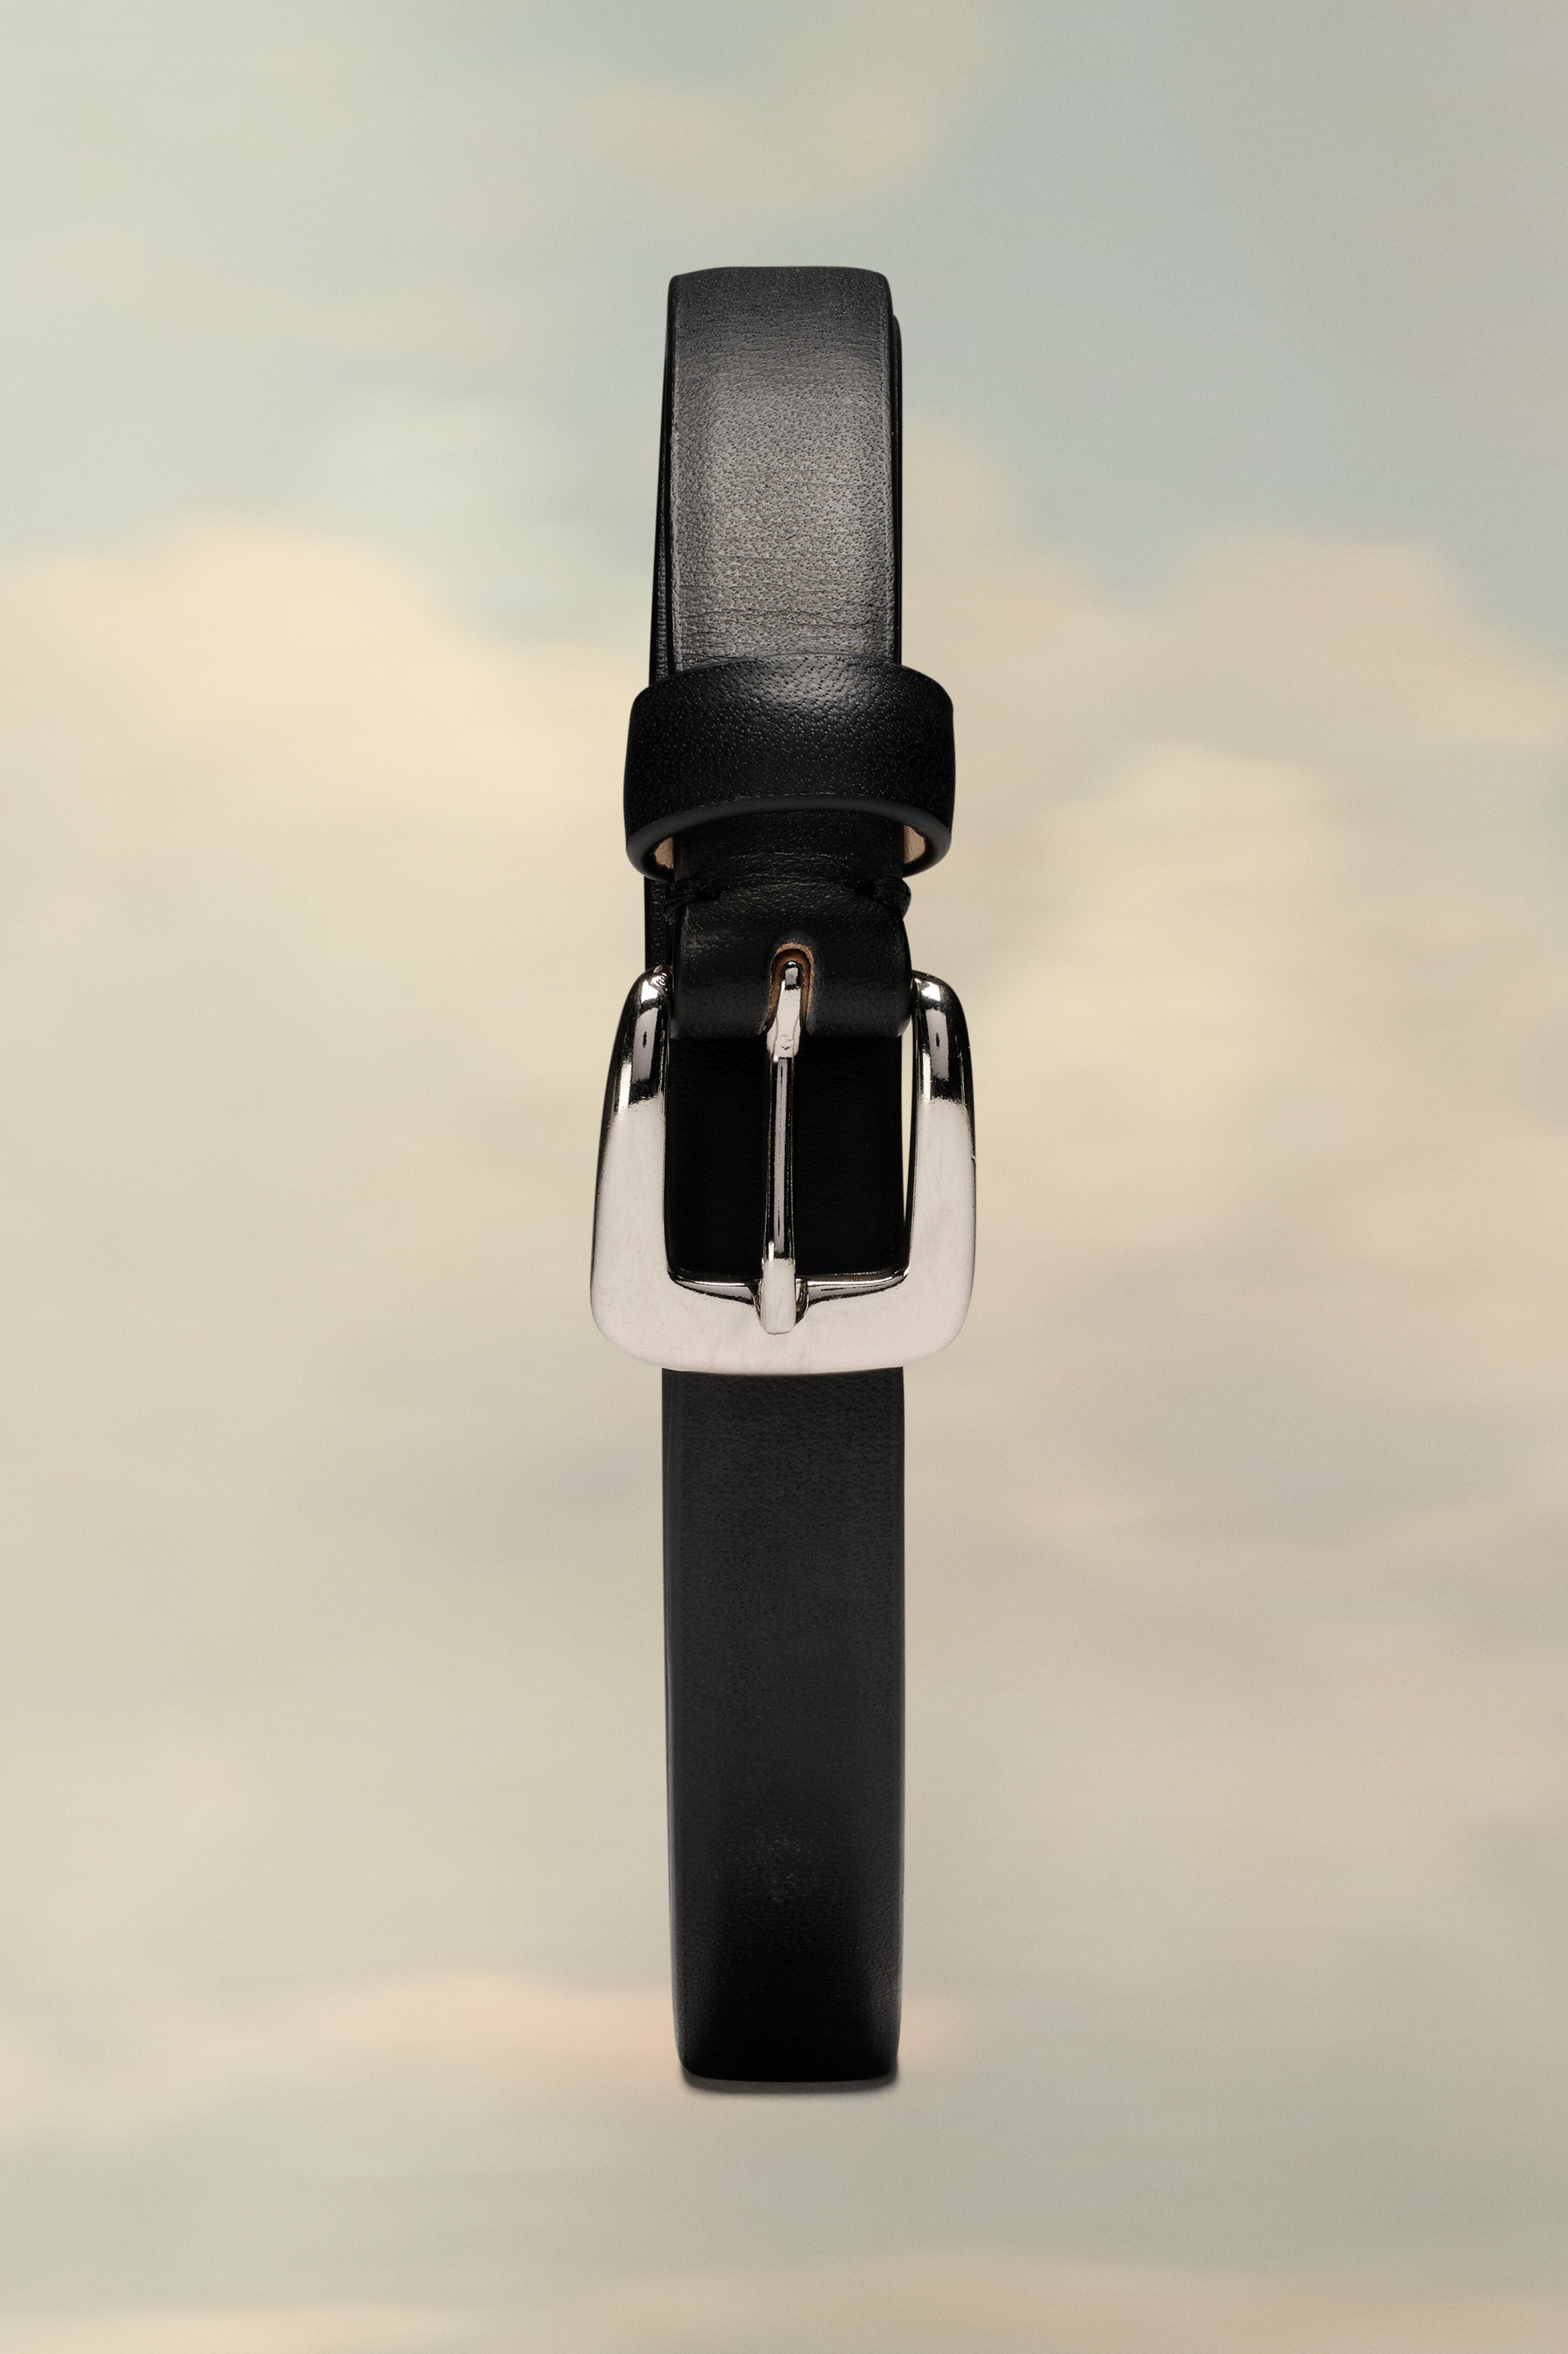 Leather Belt - 1